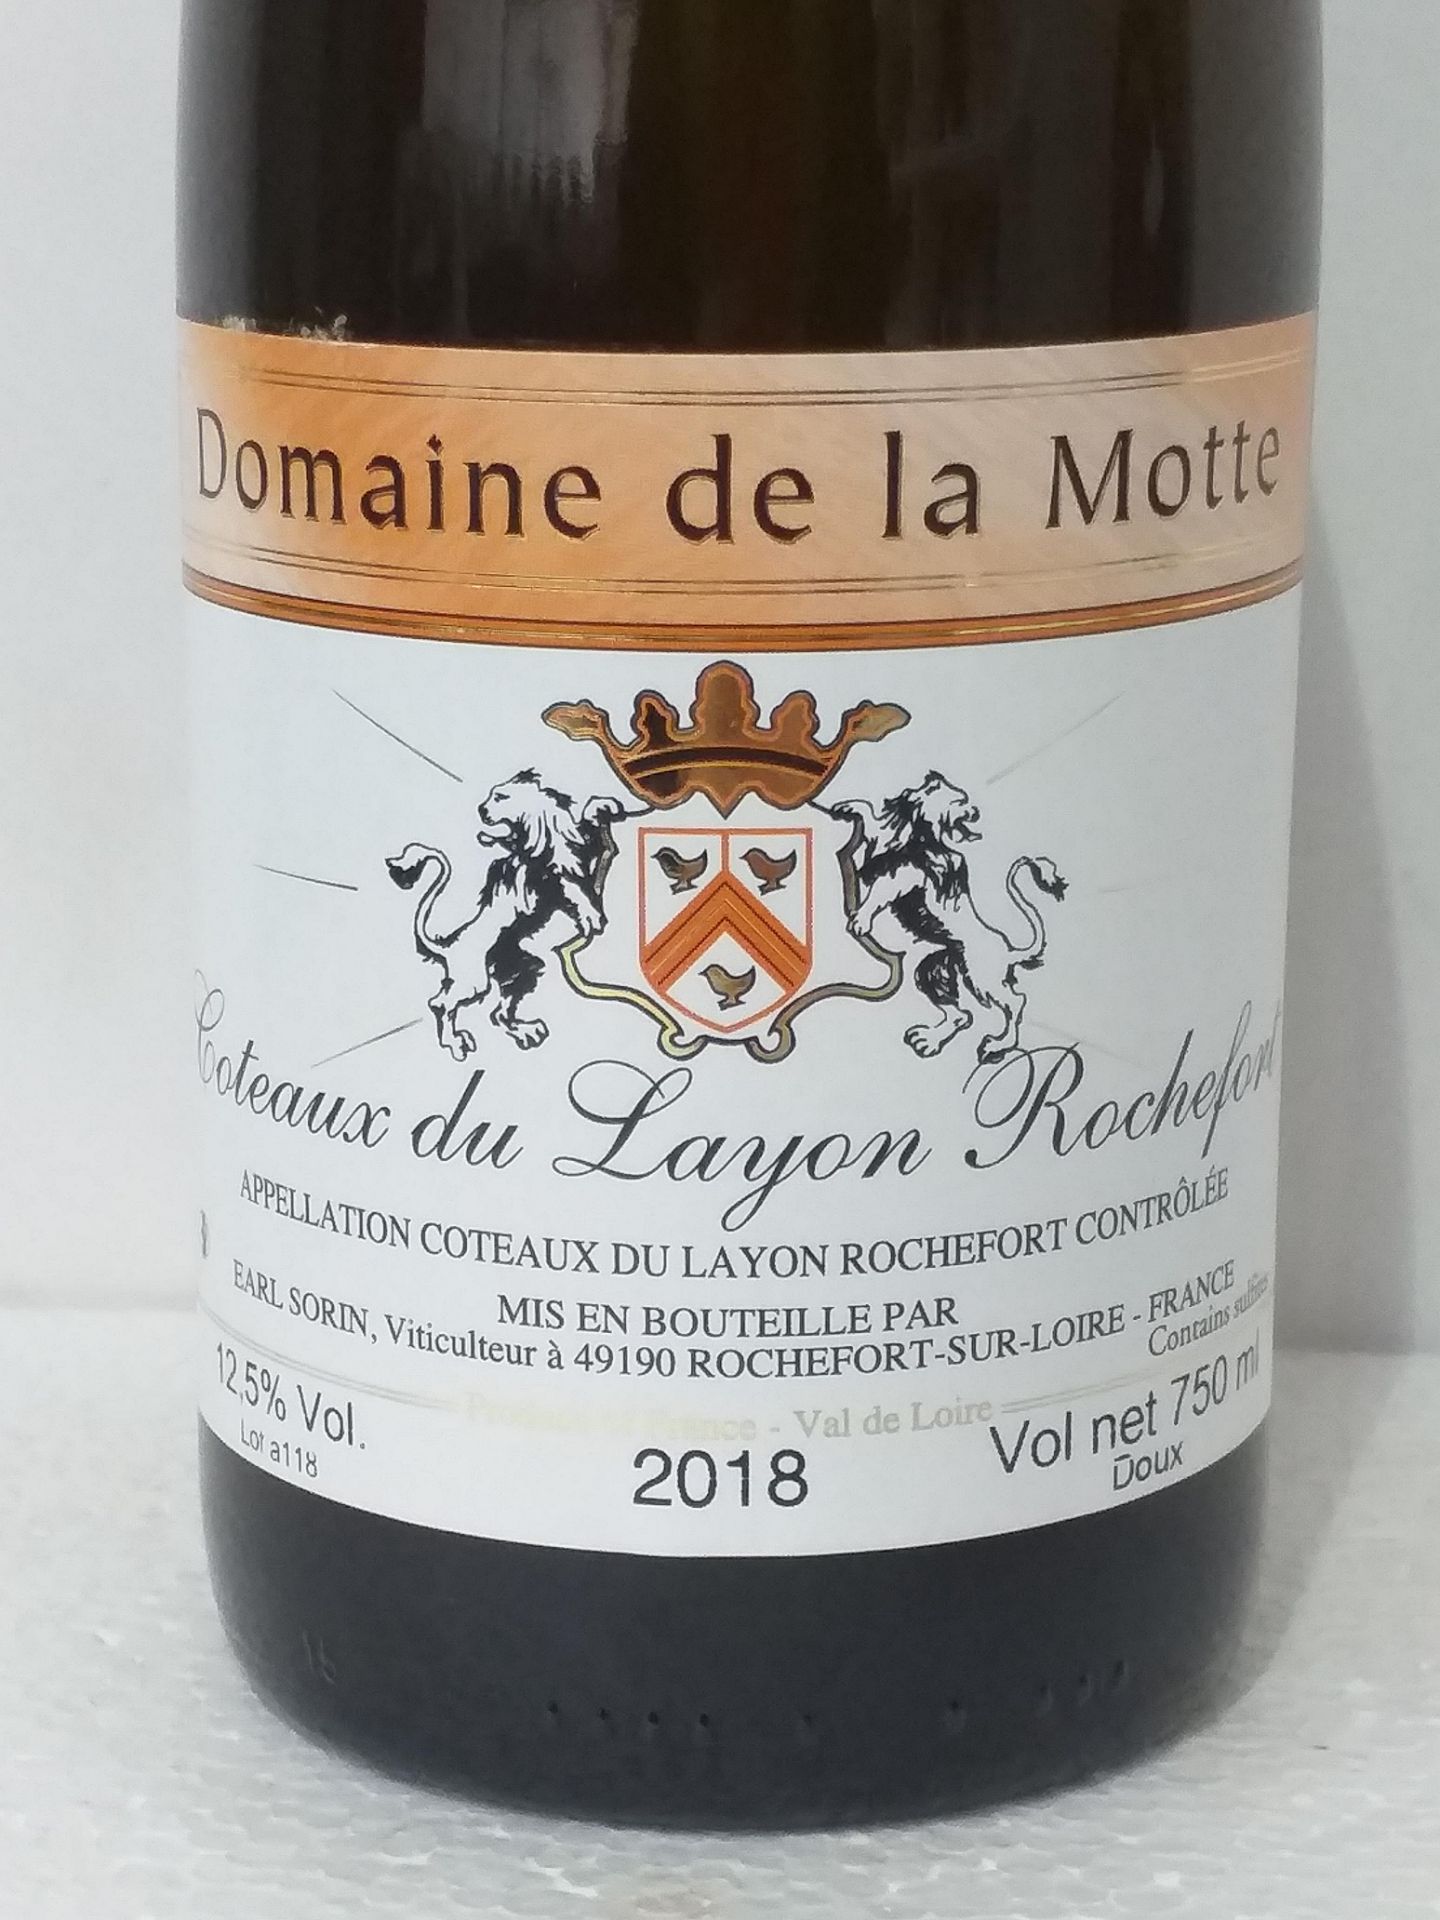 12 Bottles of Coteaux du Layon Rochefort 2018 - Image 2 of 3